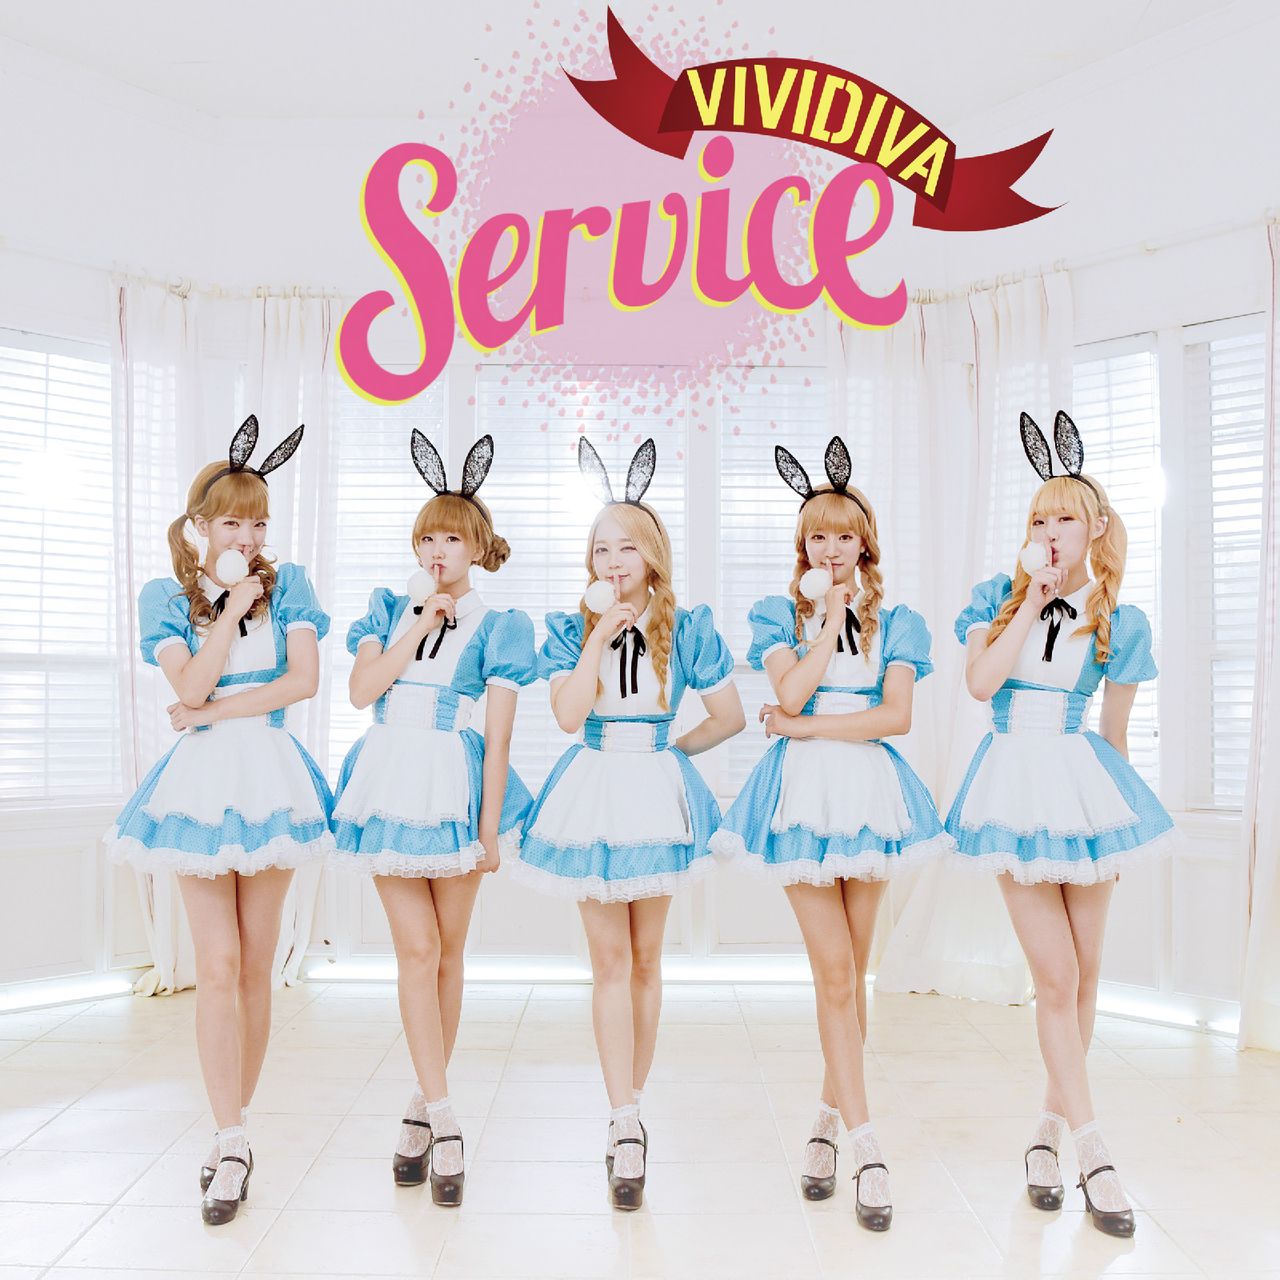 Service(韓國組合VIVIDIVA演唱單曲)